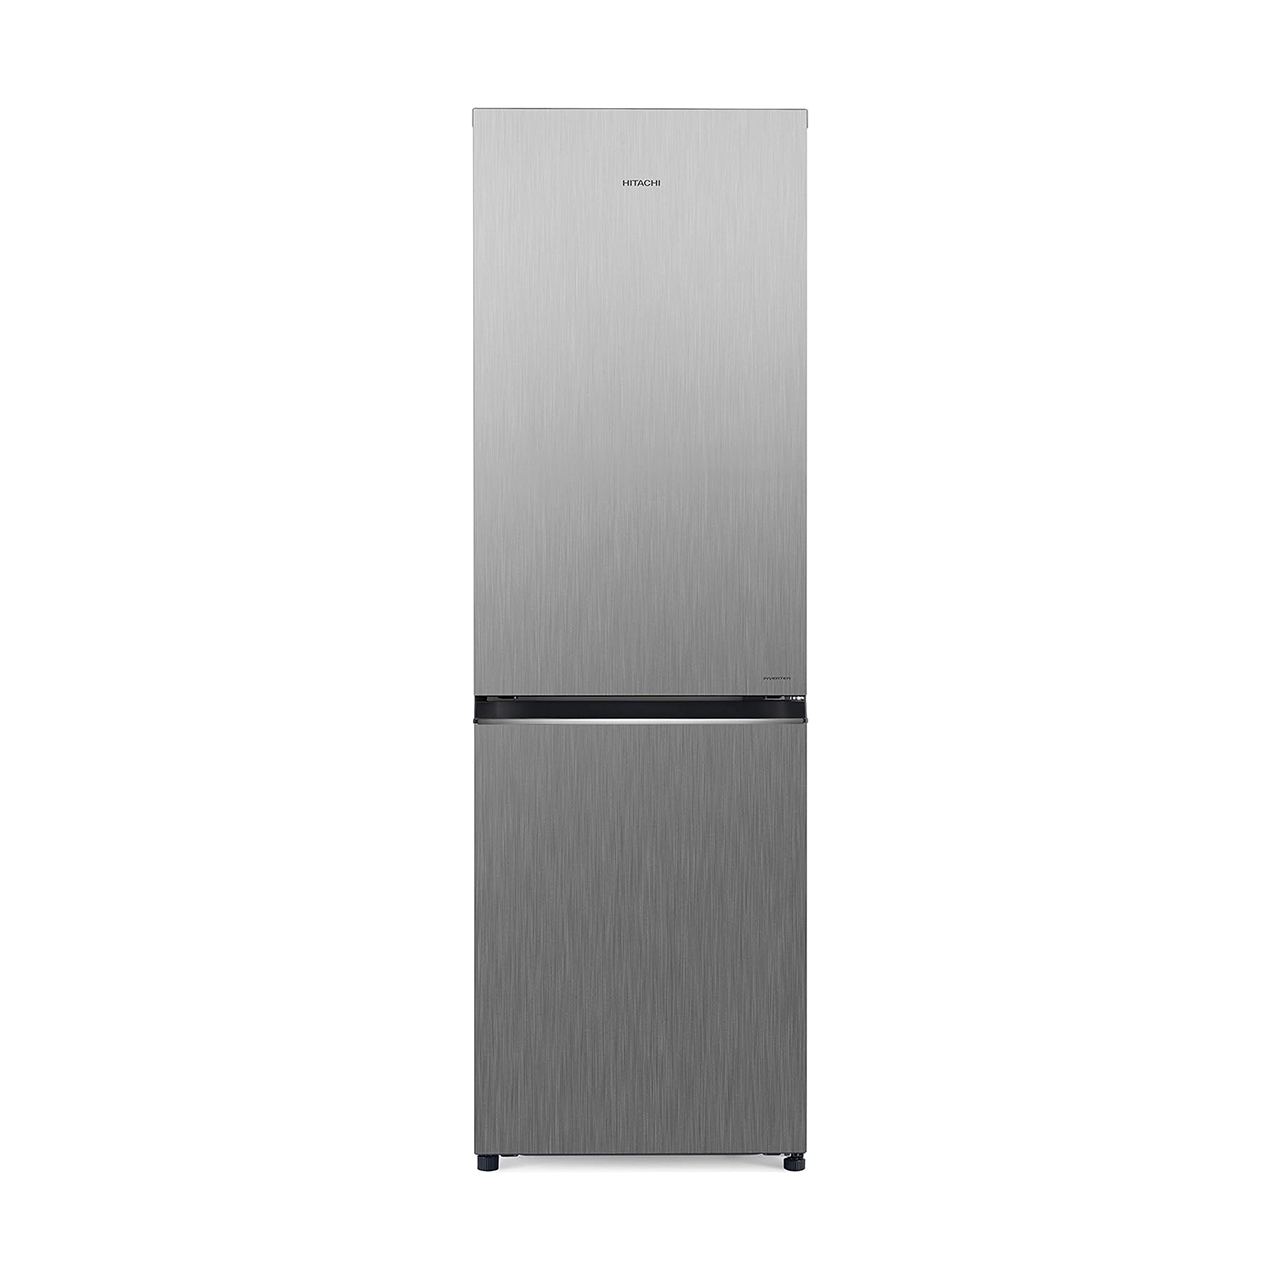 Hitachi bottom freezer inverter refrigerator - 410L